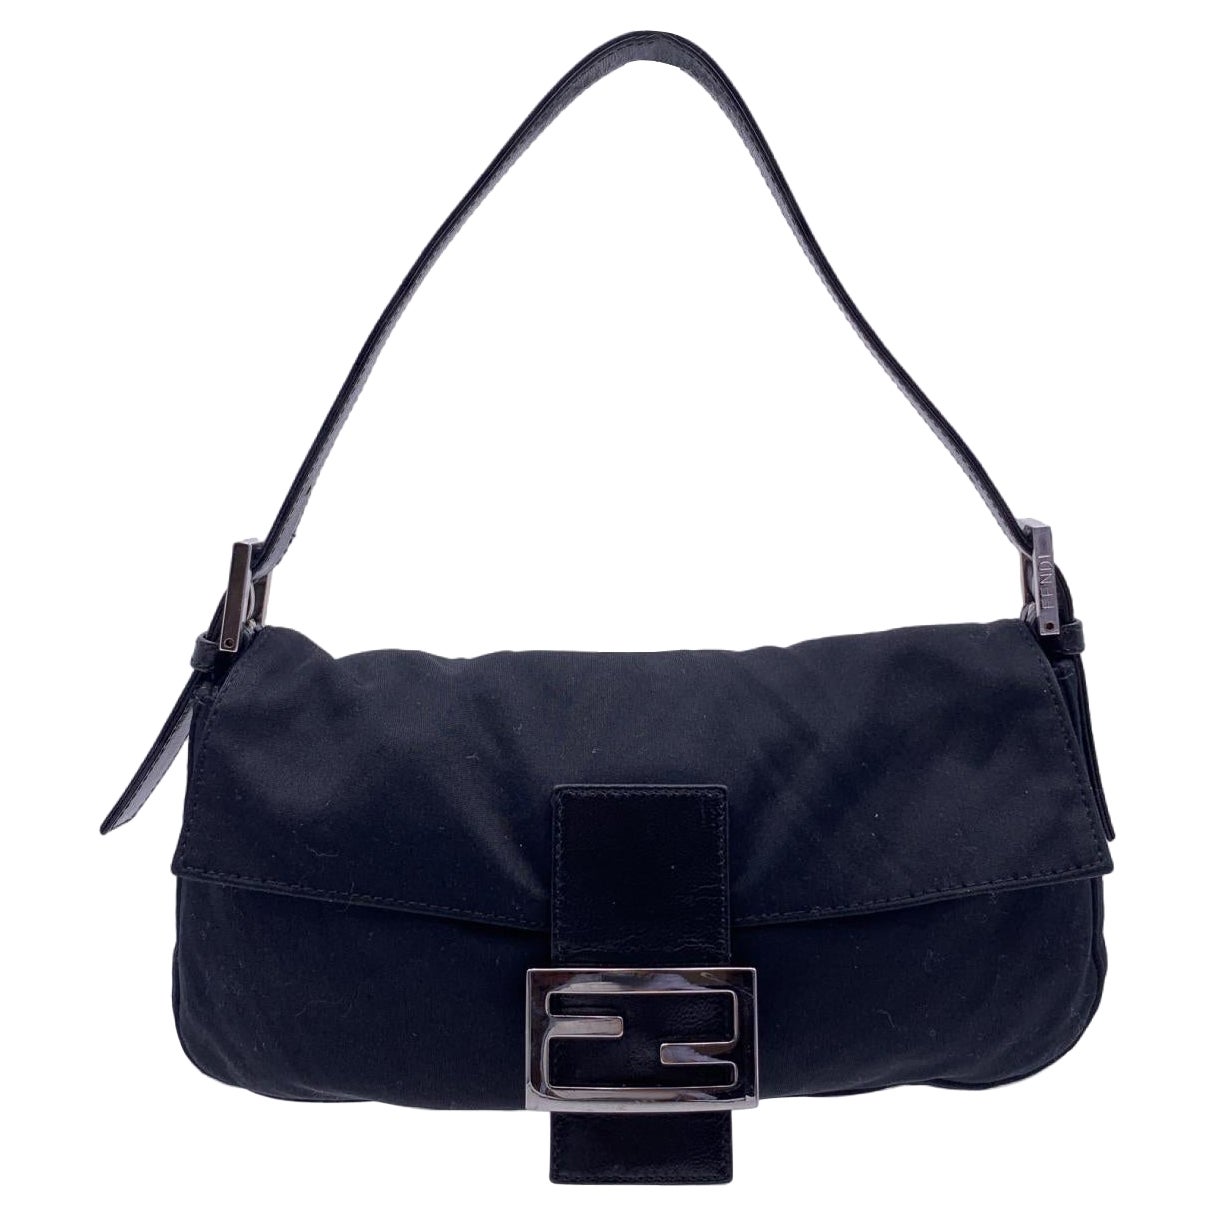 Fendi Black Fabric Small Baguette Shoulder Bag Handbag